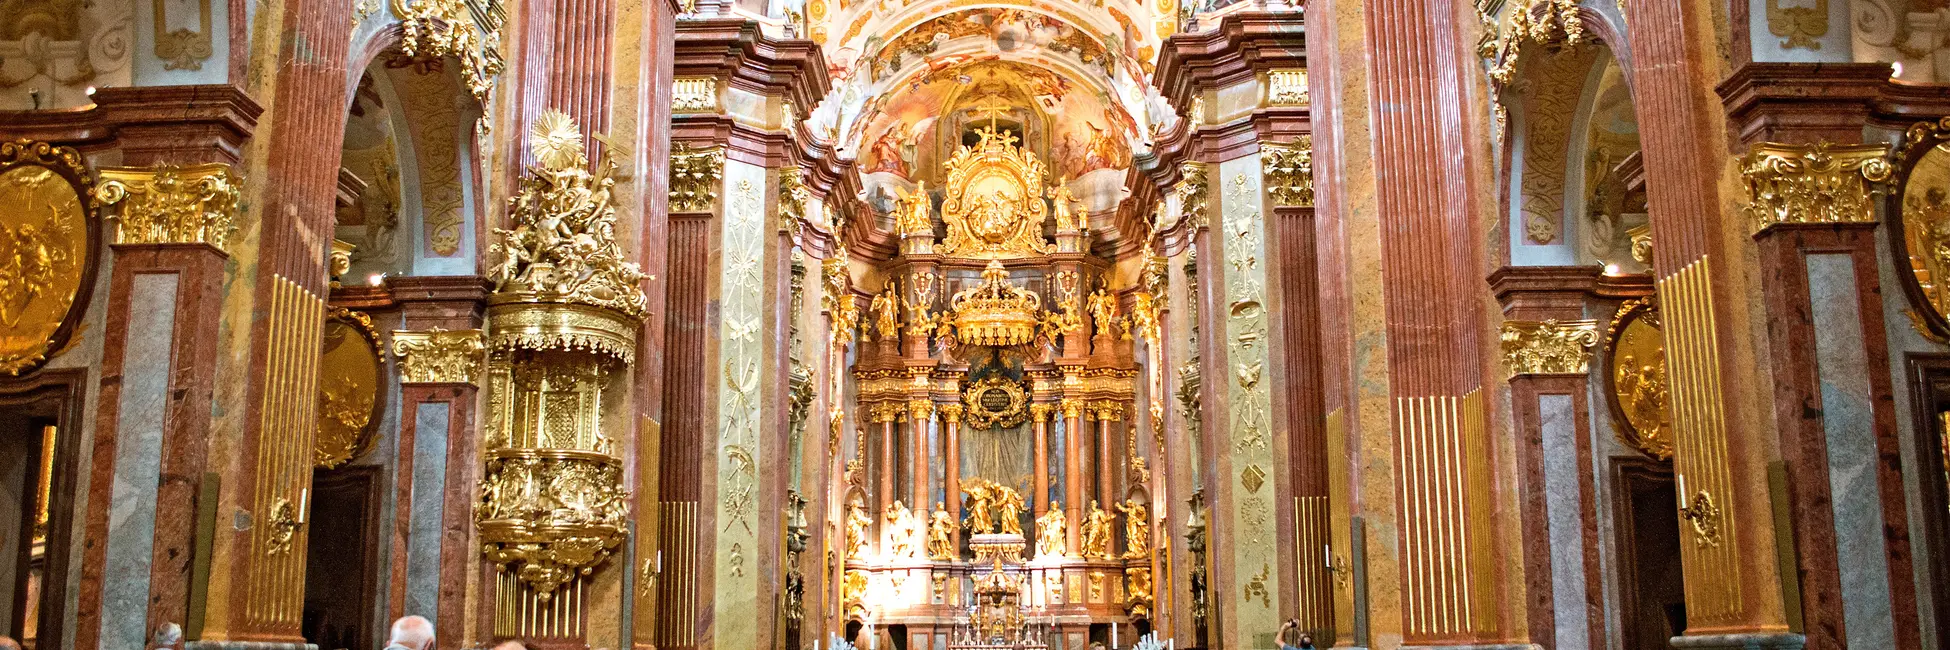 Eglise de Melk en Autriche